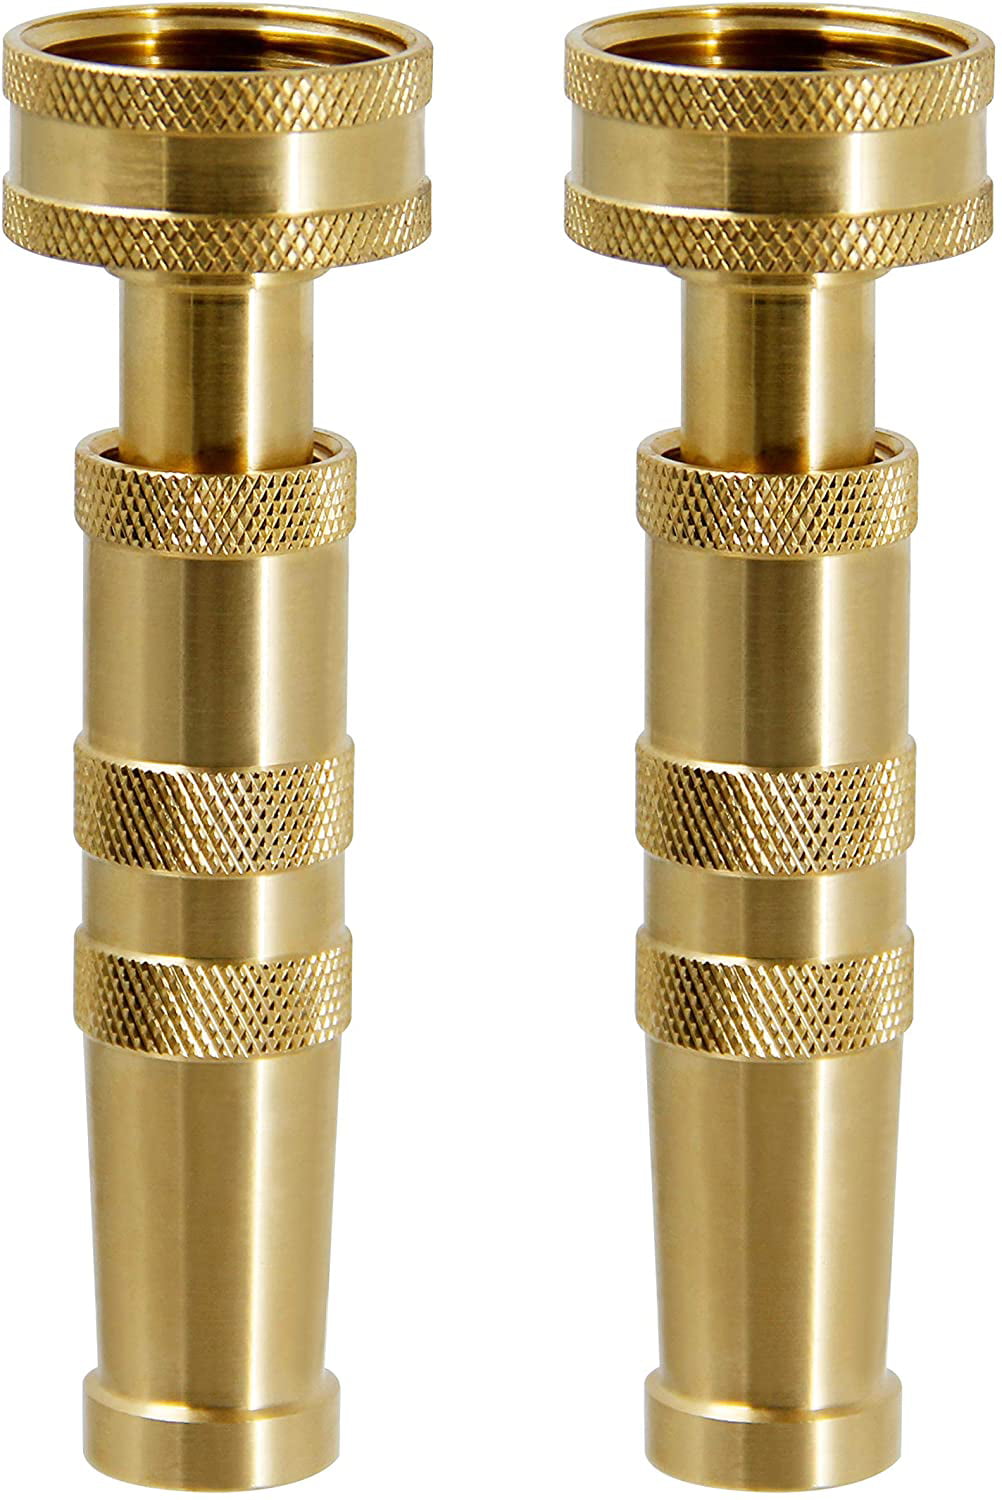 4" Brass Hose Nozzle Adapter Heavy Duty Twist For Garden Watering Car Cleaning 